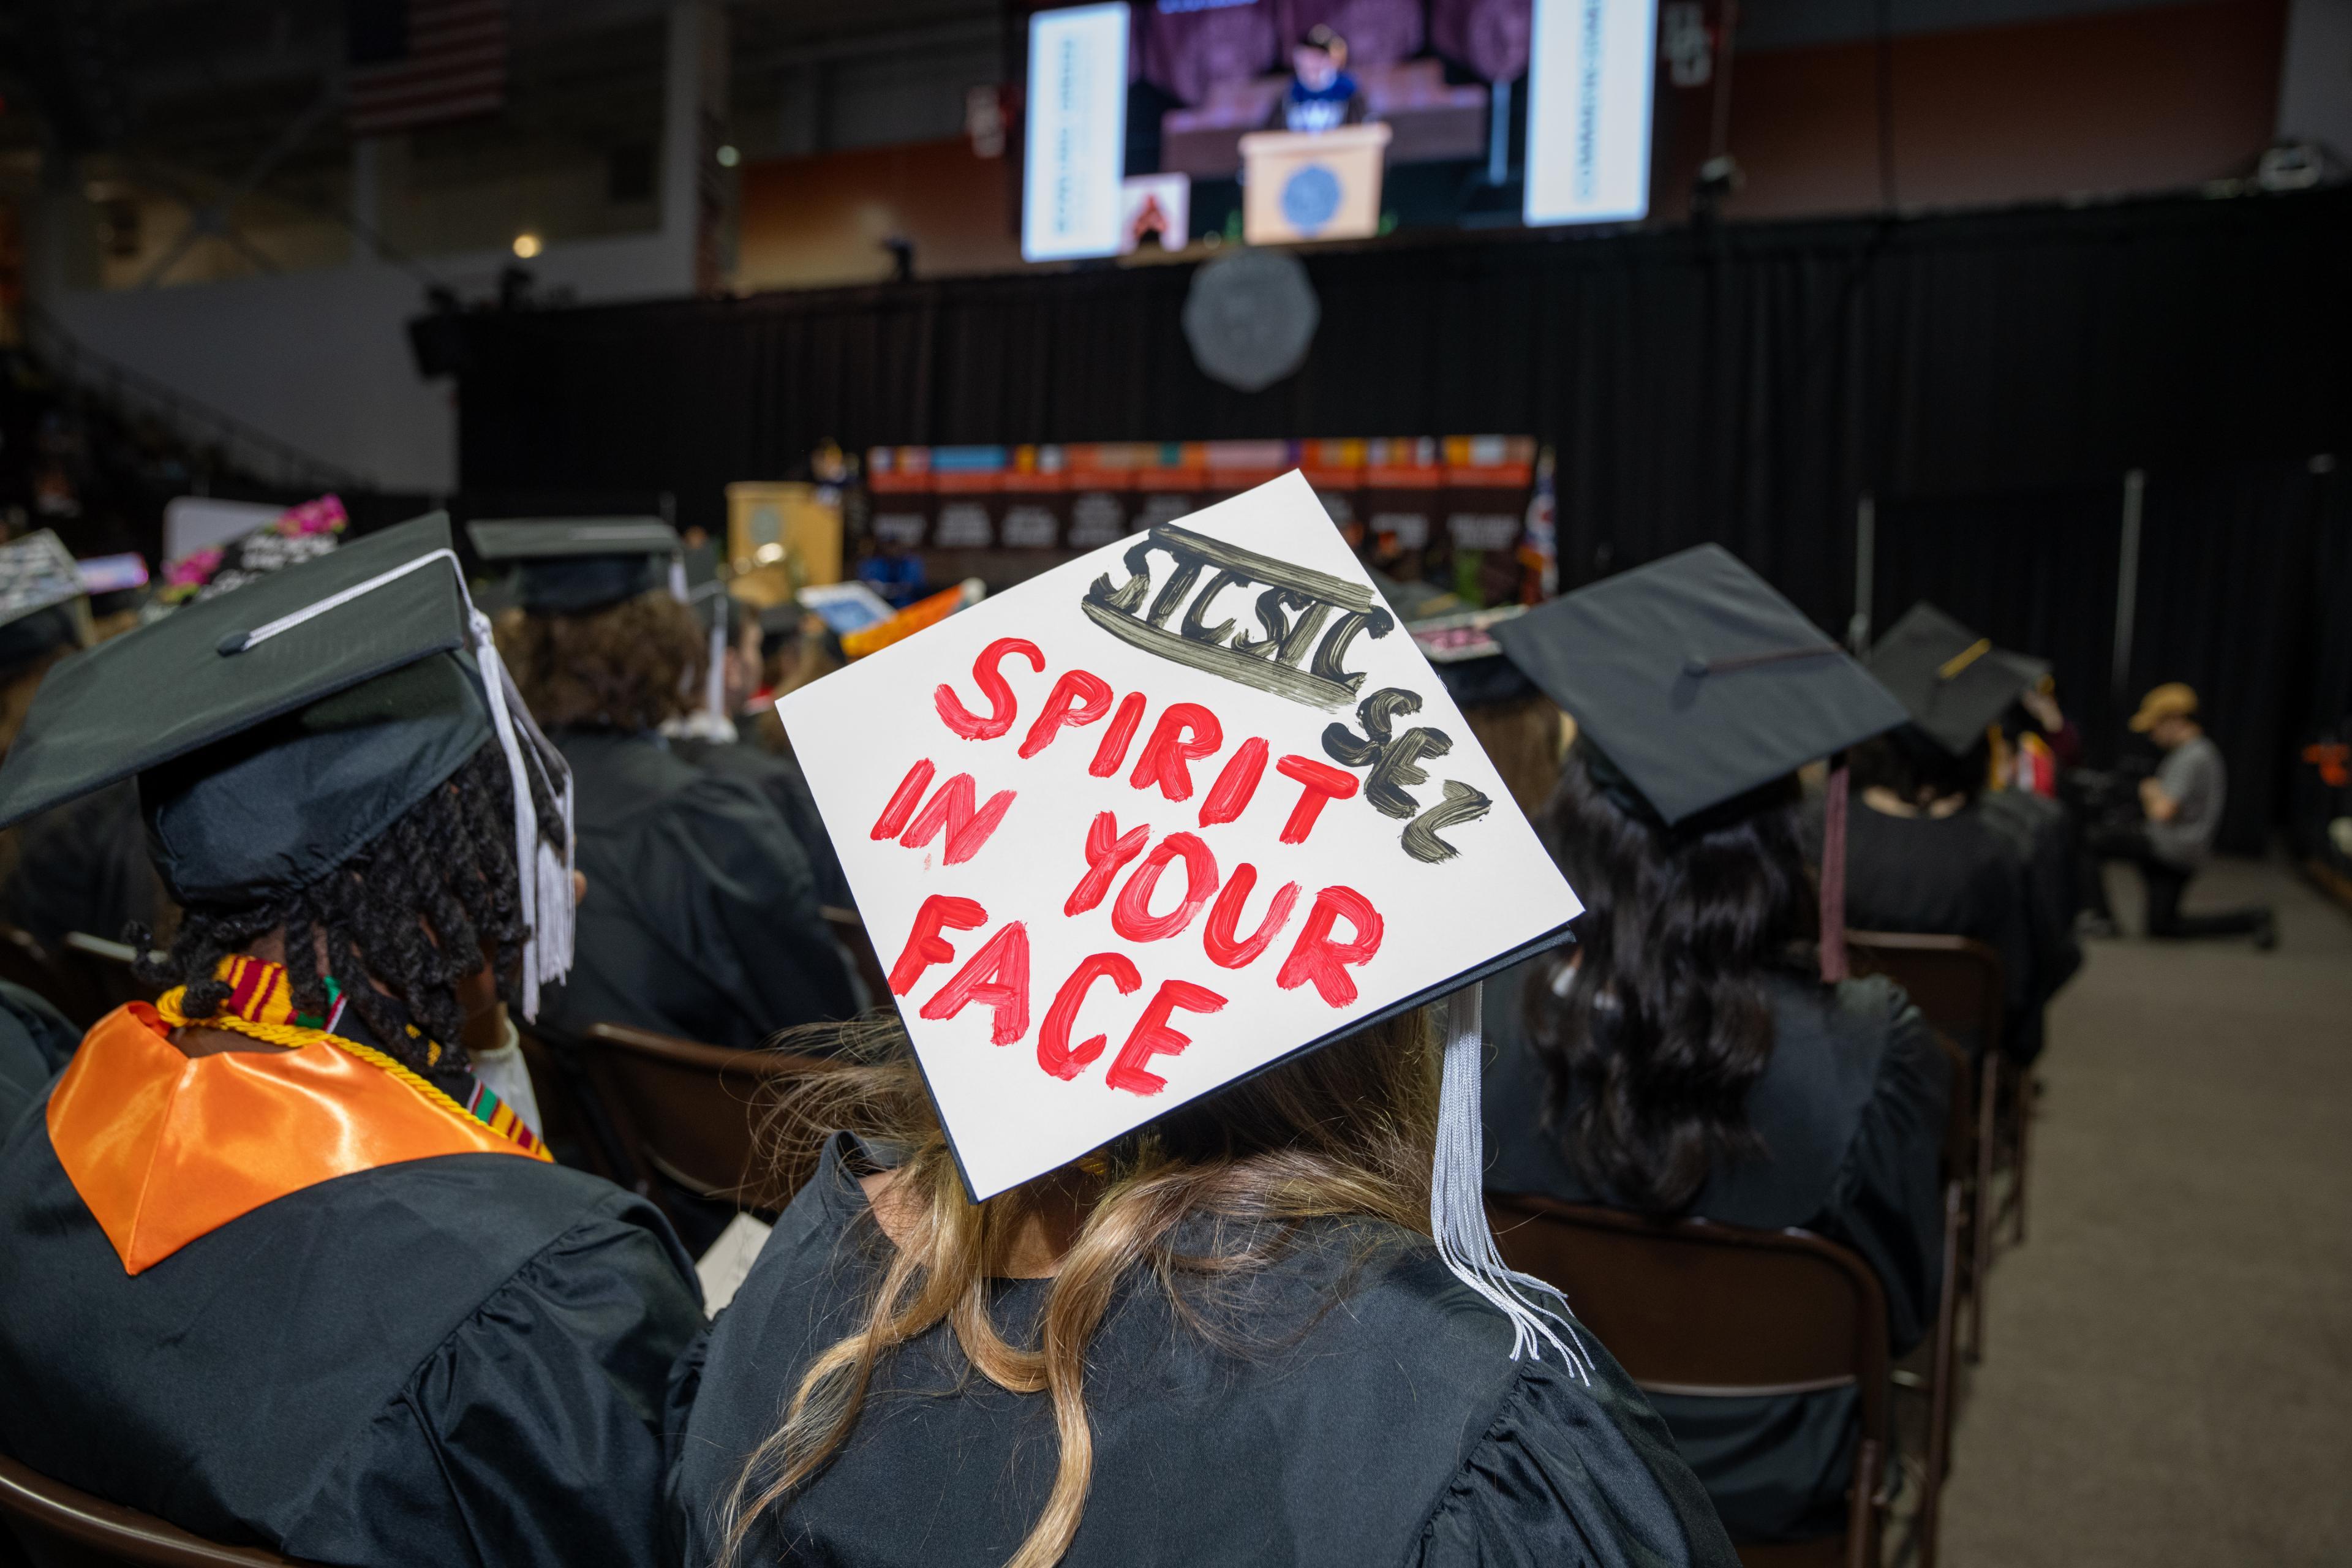 Gradution cap says, "SICSIC Sez Spirit in Your Face"